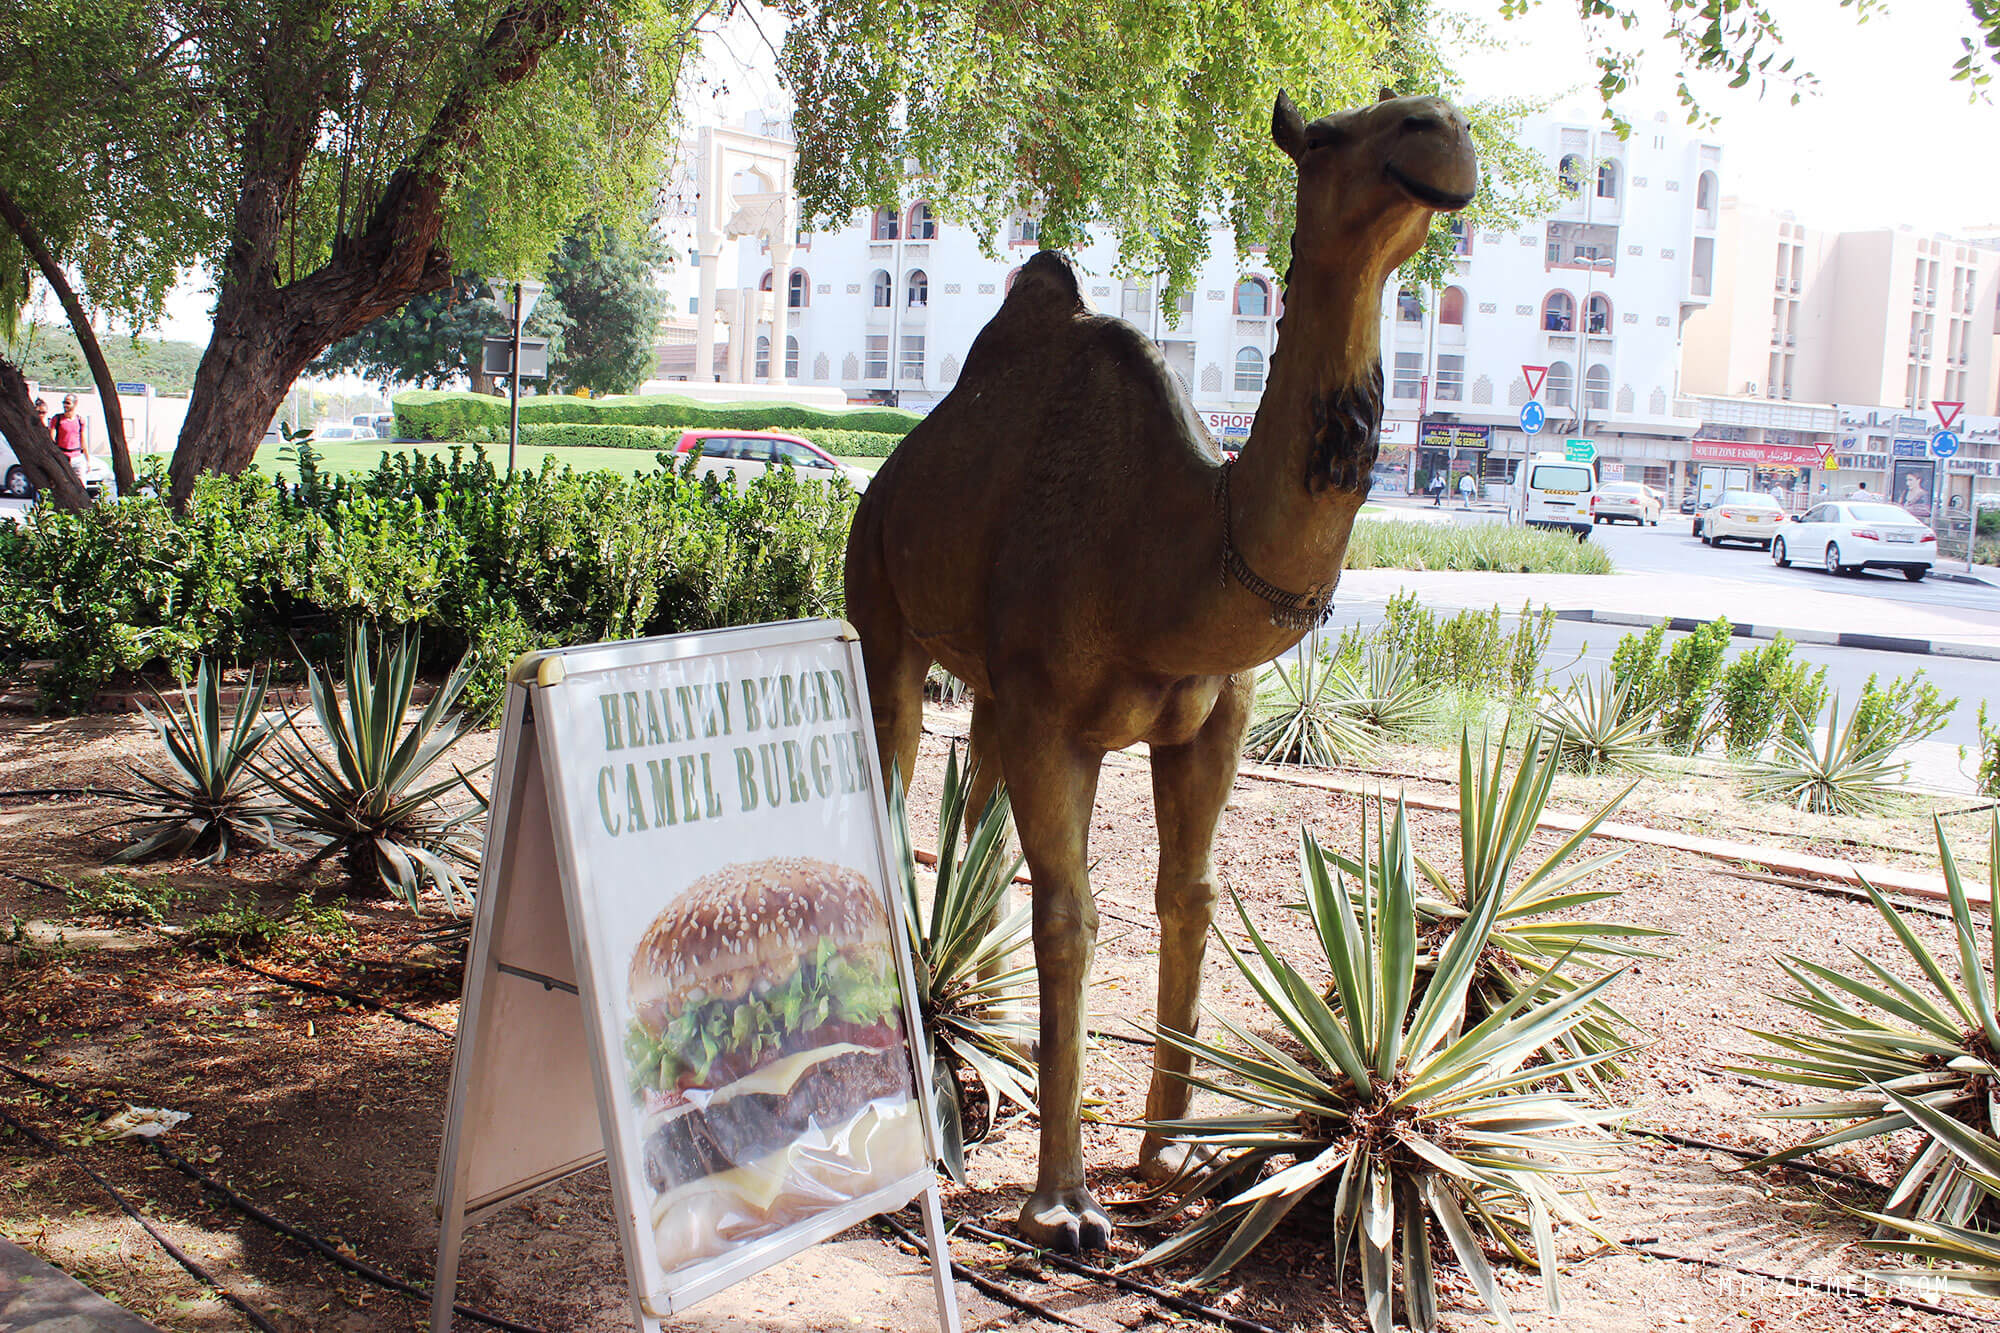 Camel Burger restaurant in Dubai